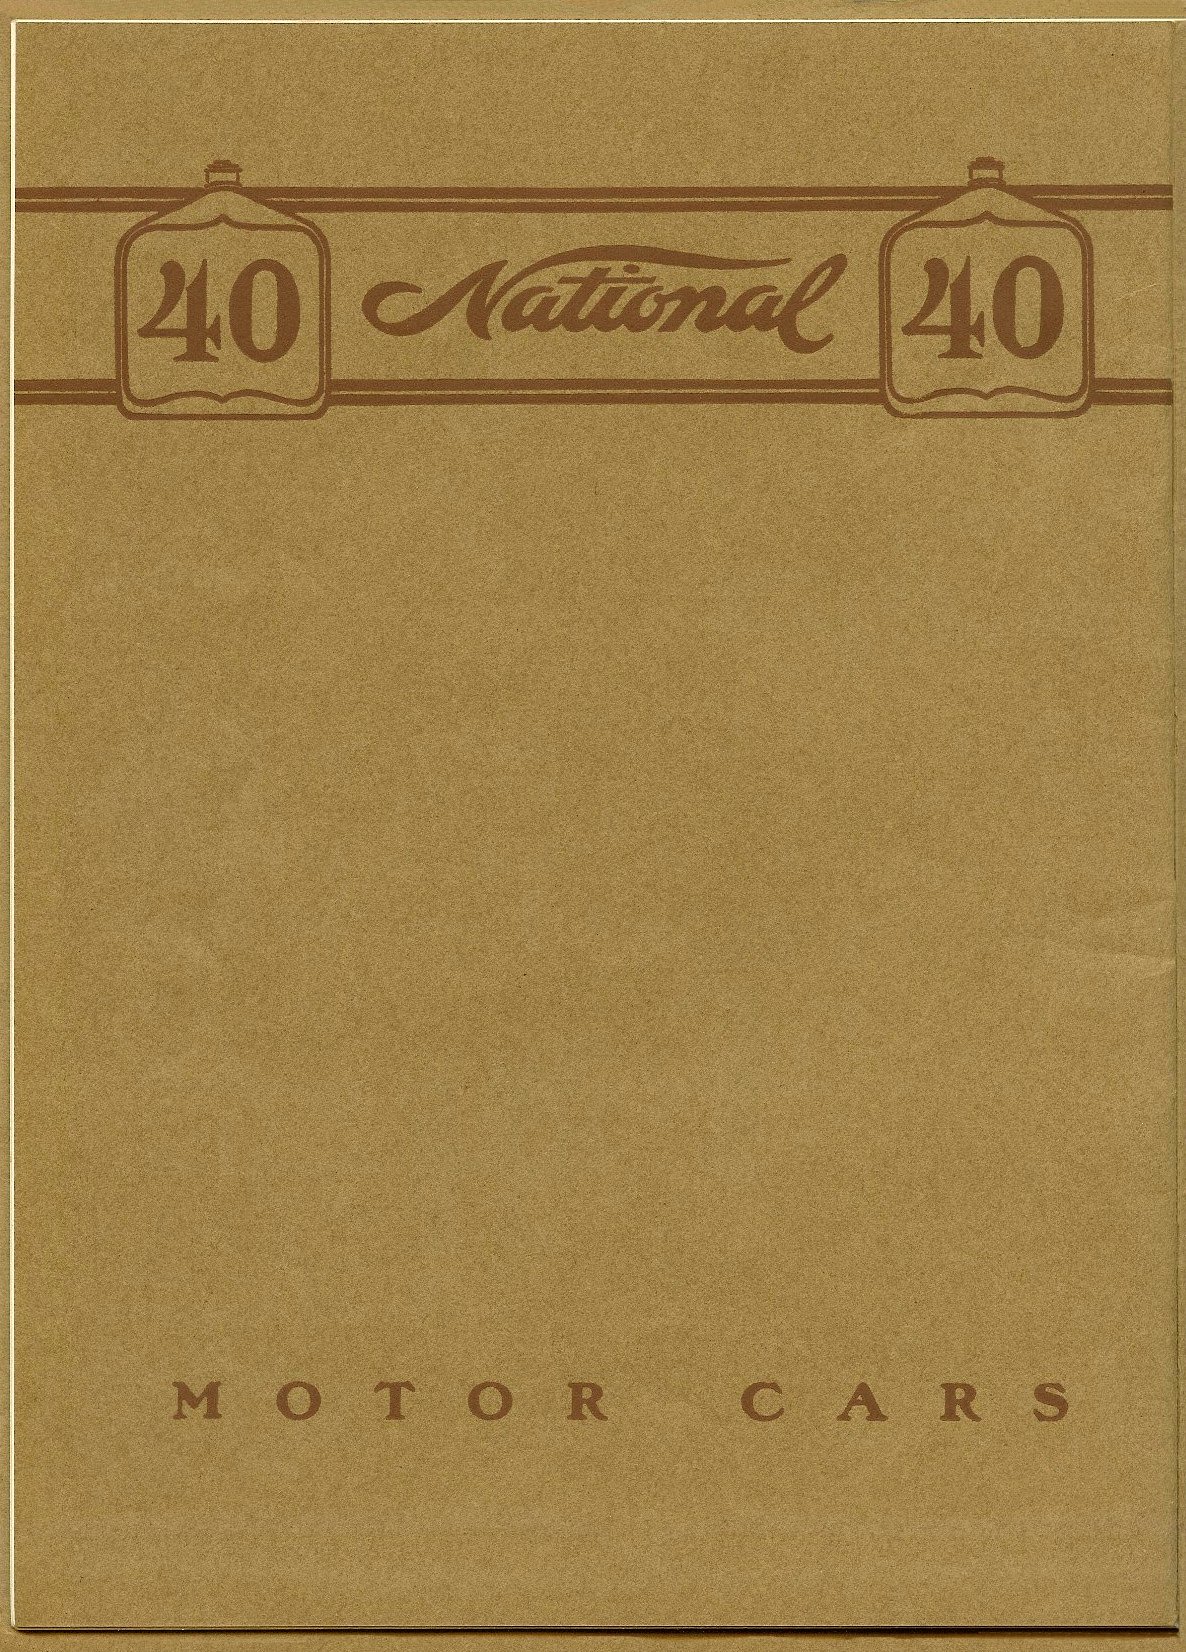 1911_National_40_Catalogue-25a